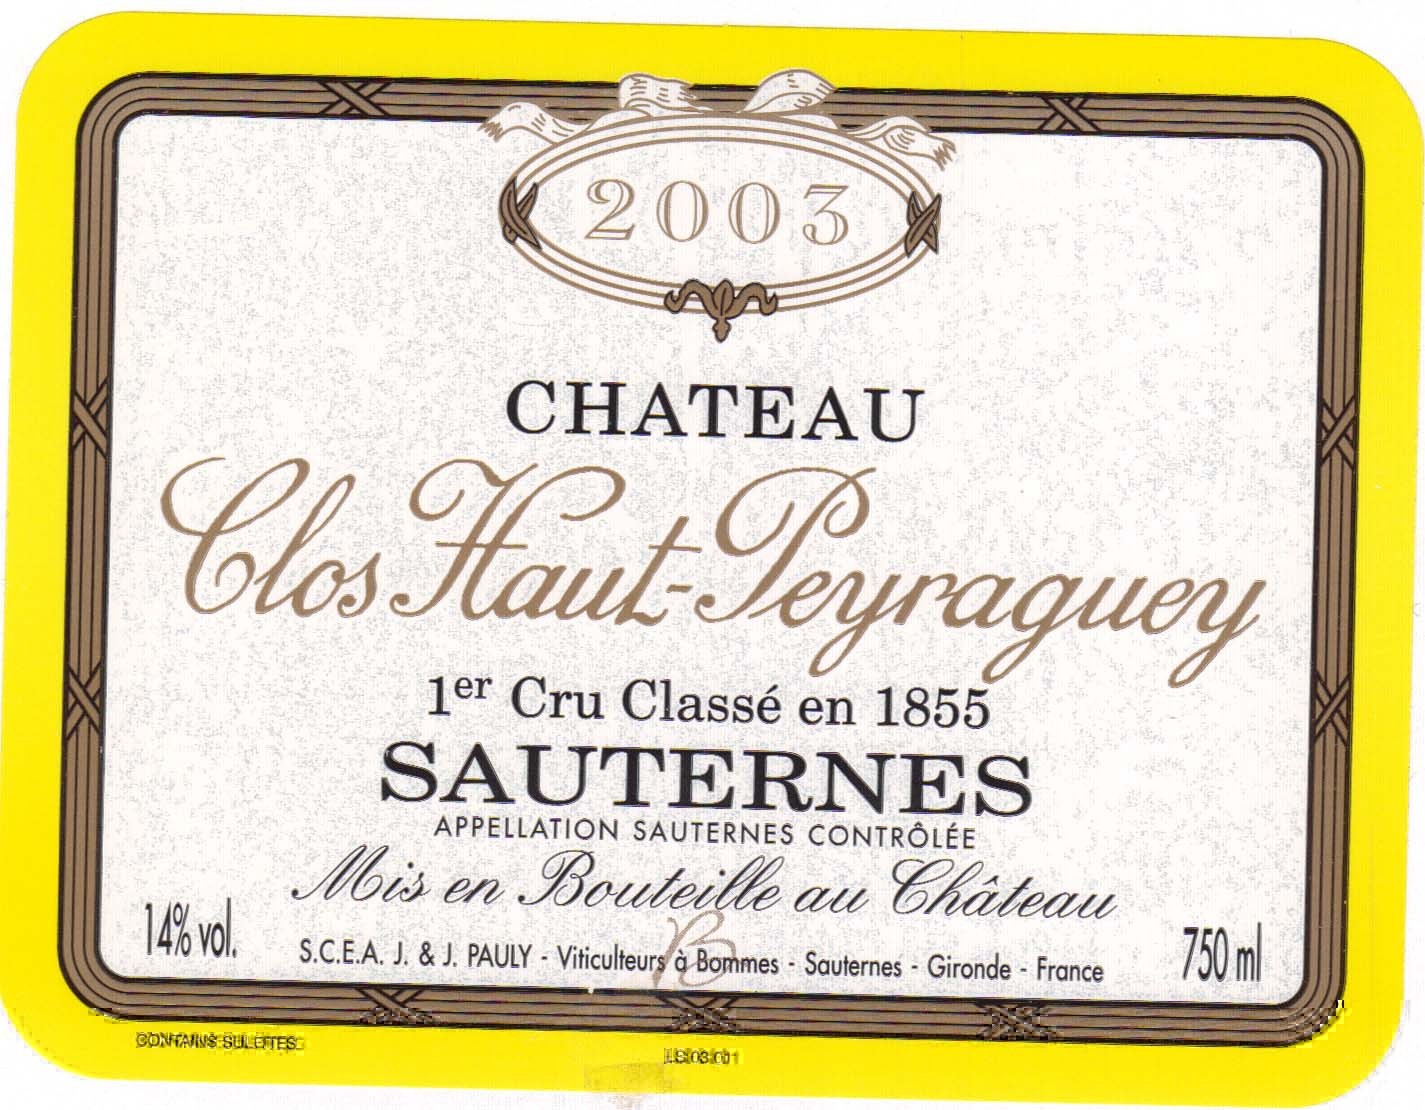 奥派瑞酒庄贵腐甜白Chateau Clos Haut-Peyraguey